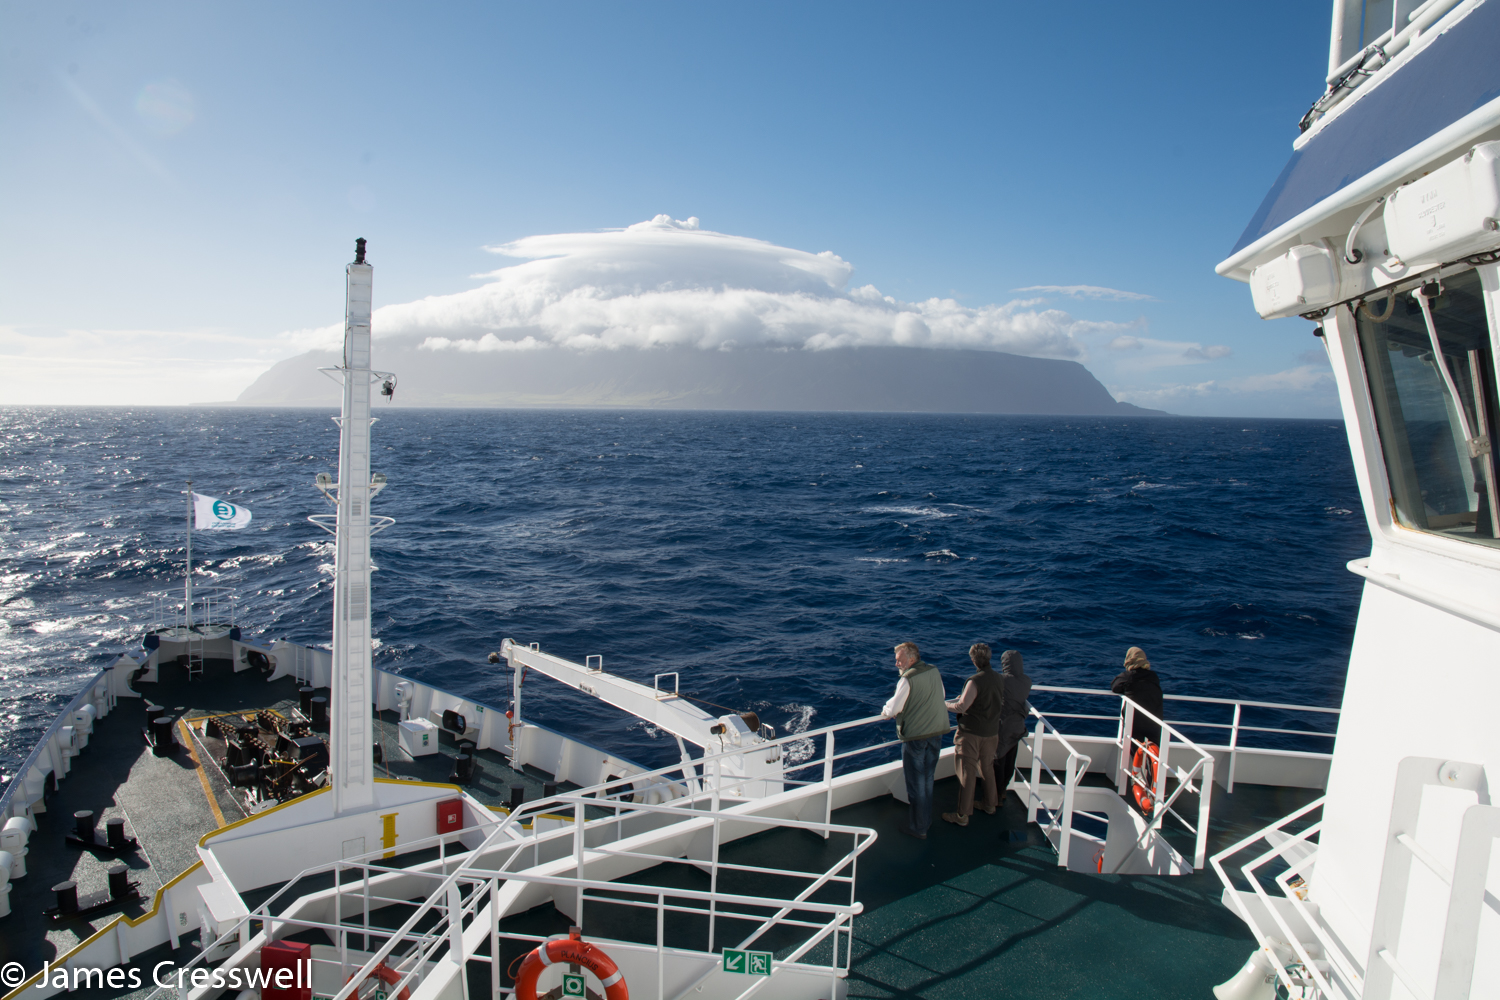 A photograph from a ship as it approaches a volcanic island, Tristan da Cunha, taken on a PolarWorld Travel placed cruise